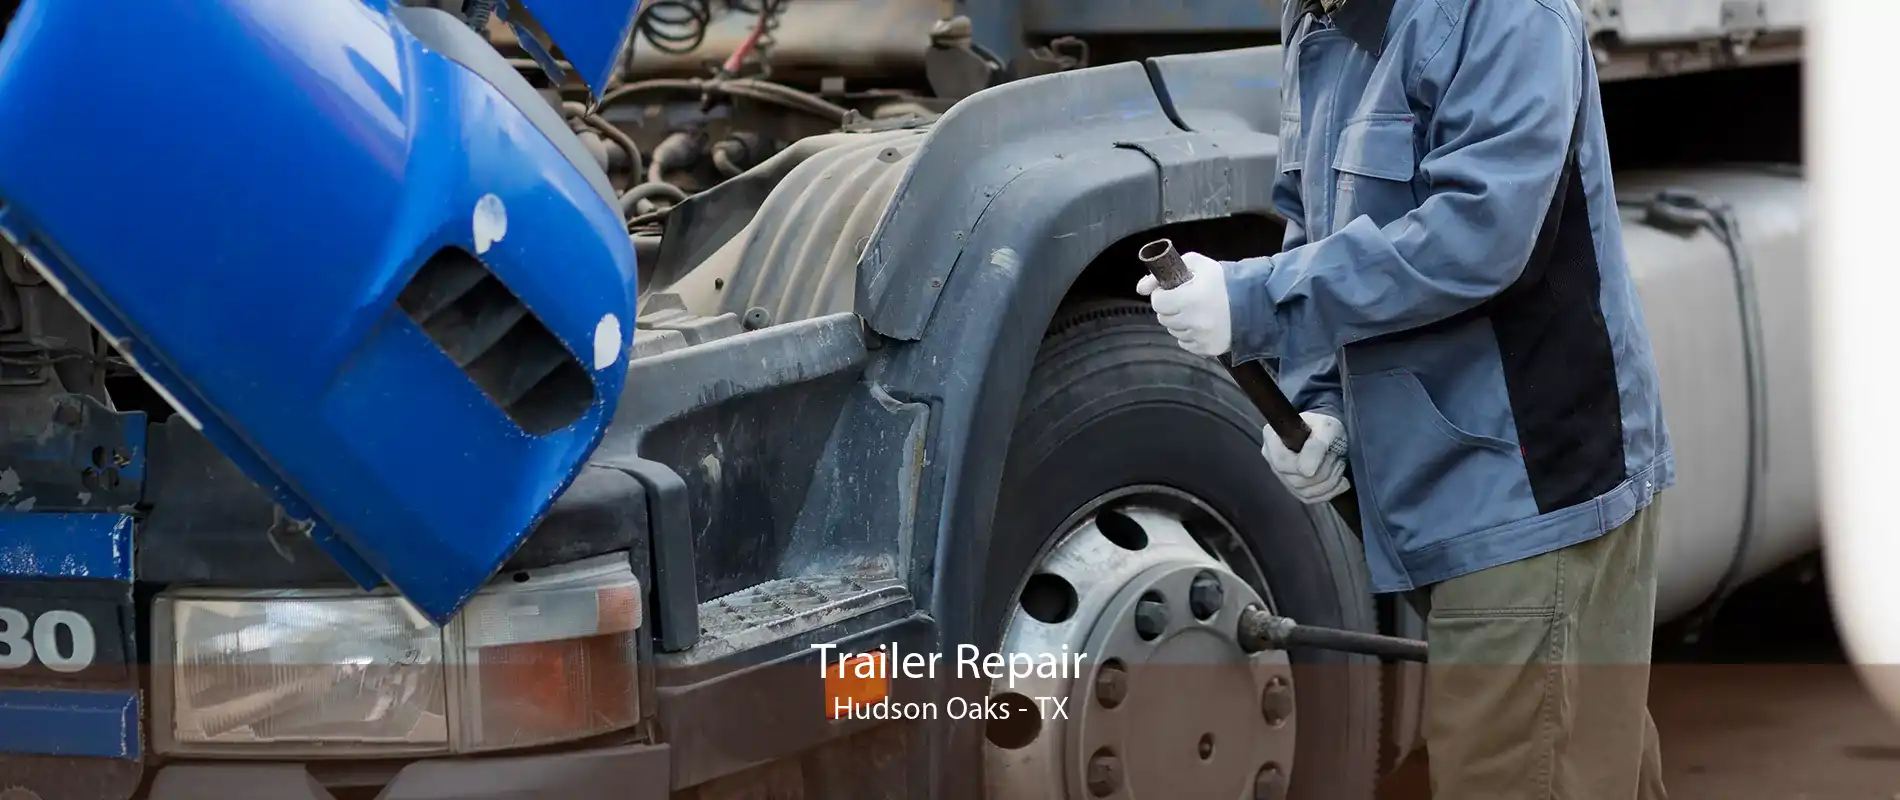 Trailer Repair Hudson Oaks - TX